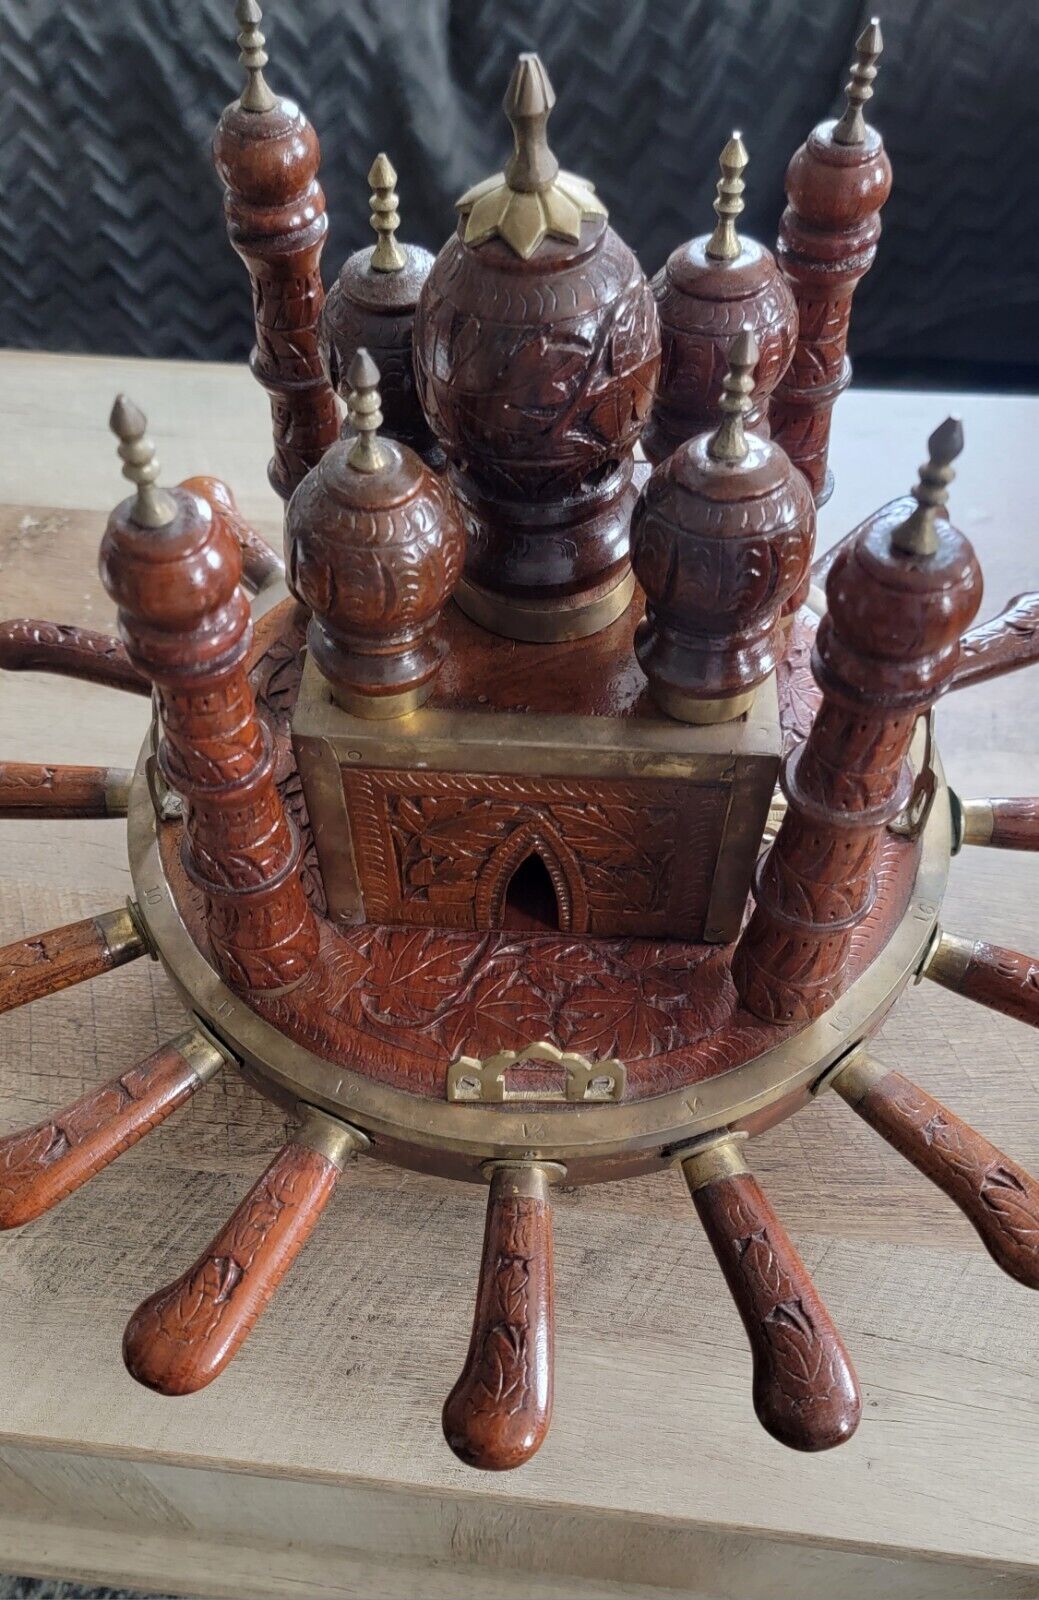 Vintage Taij Mahal Meat Carving Carousel (VERY RARE)